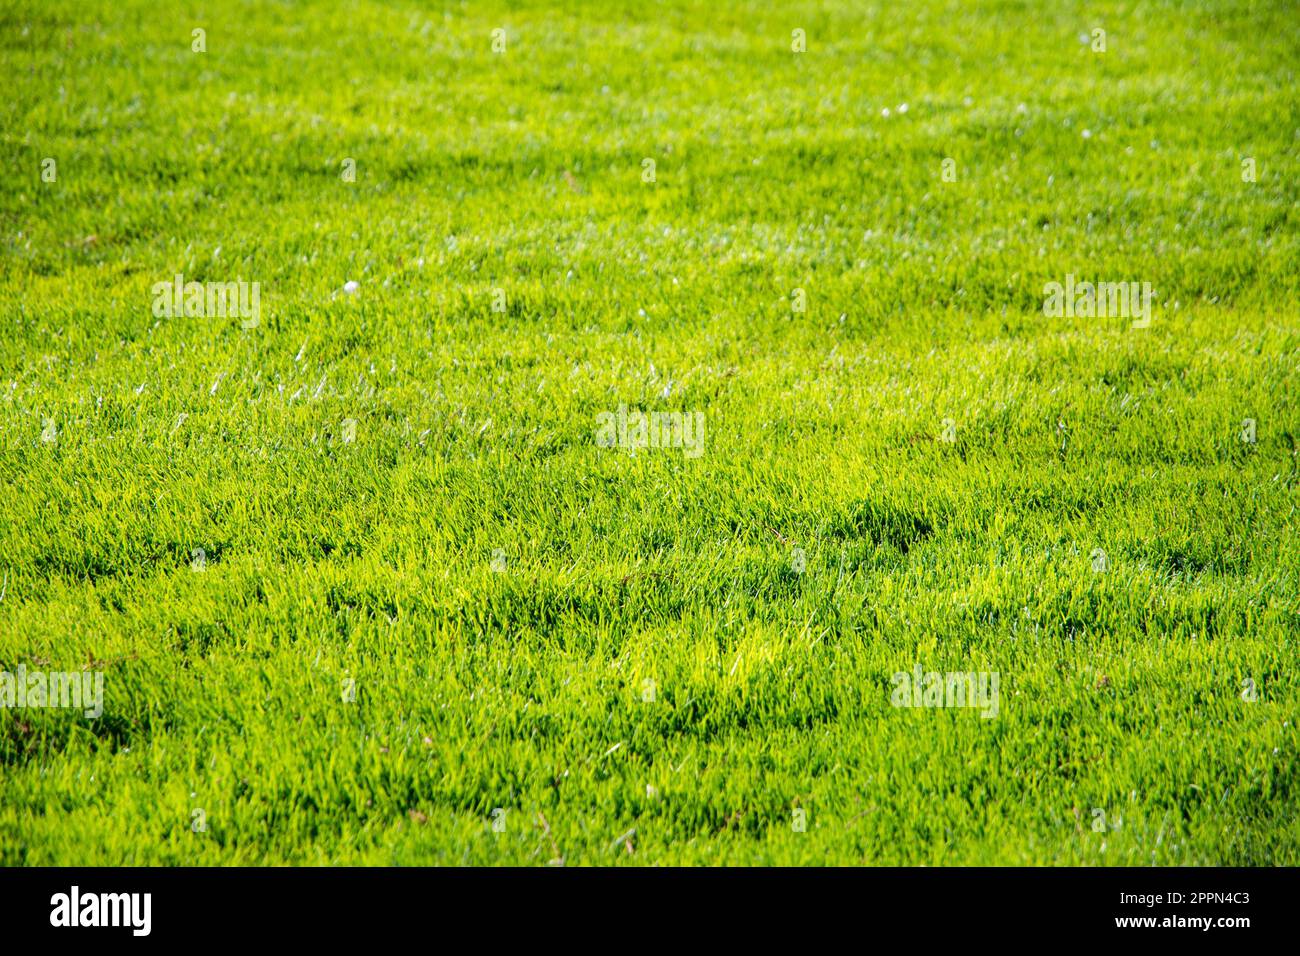 Green grass background of a short cut golf lawn Stock Photo